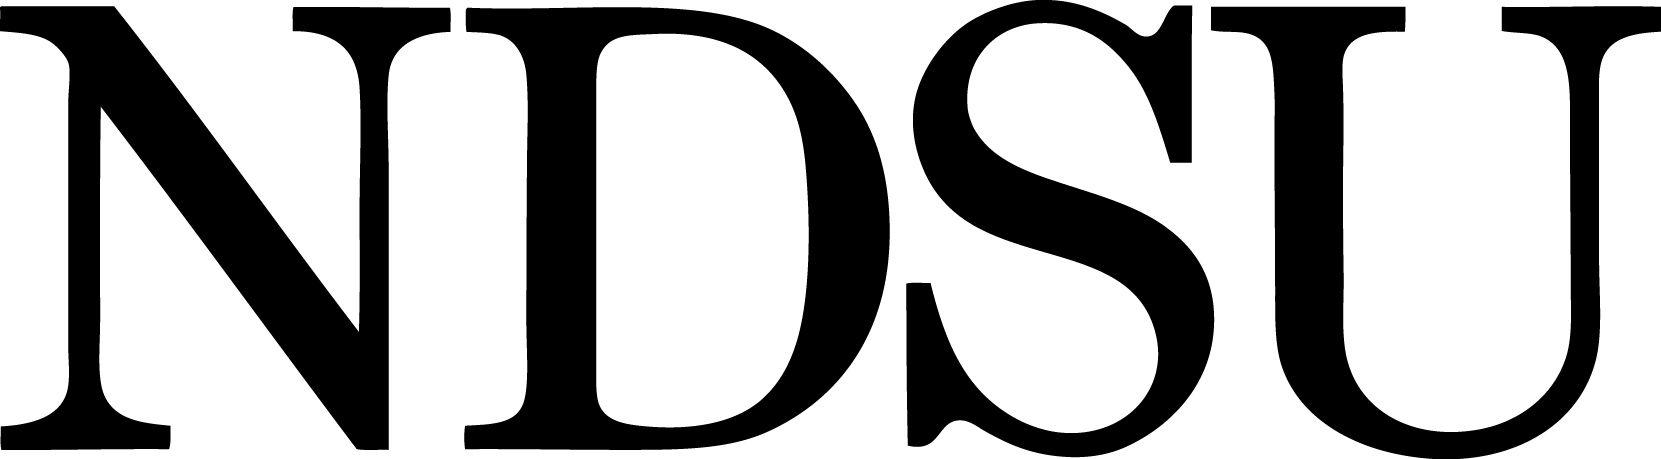 ND Bison Logo - NDSU Logos | University Relations | NDSU